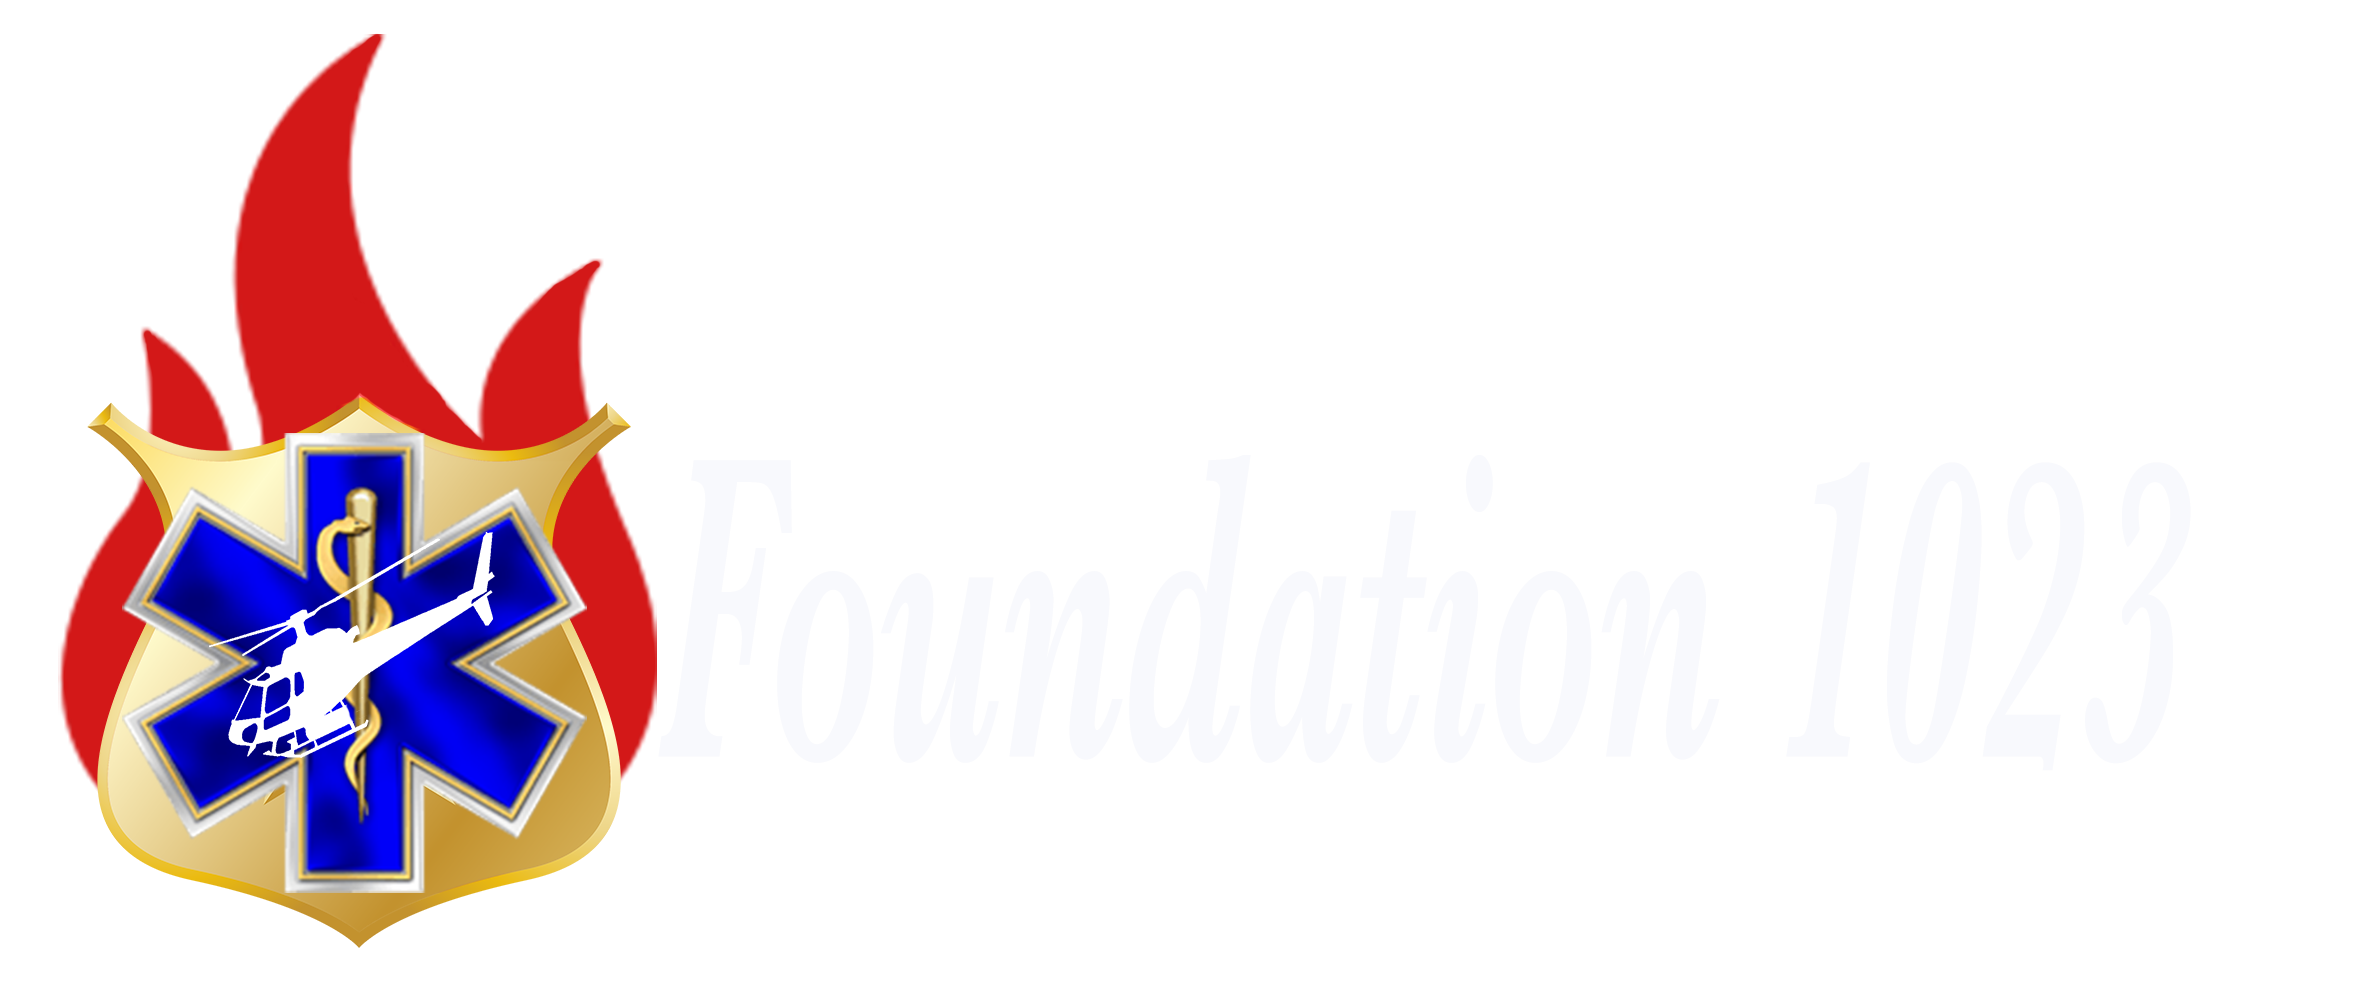 Foundation 1023